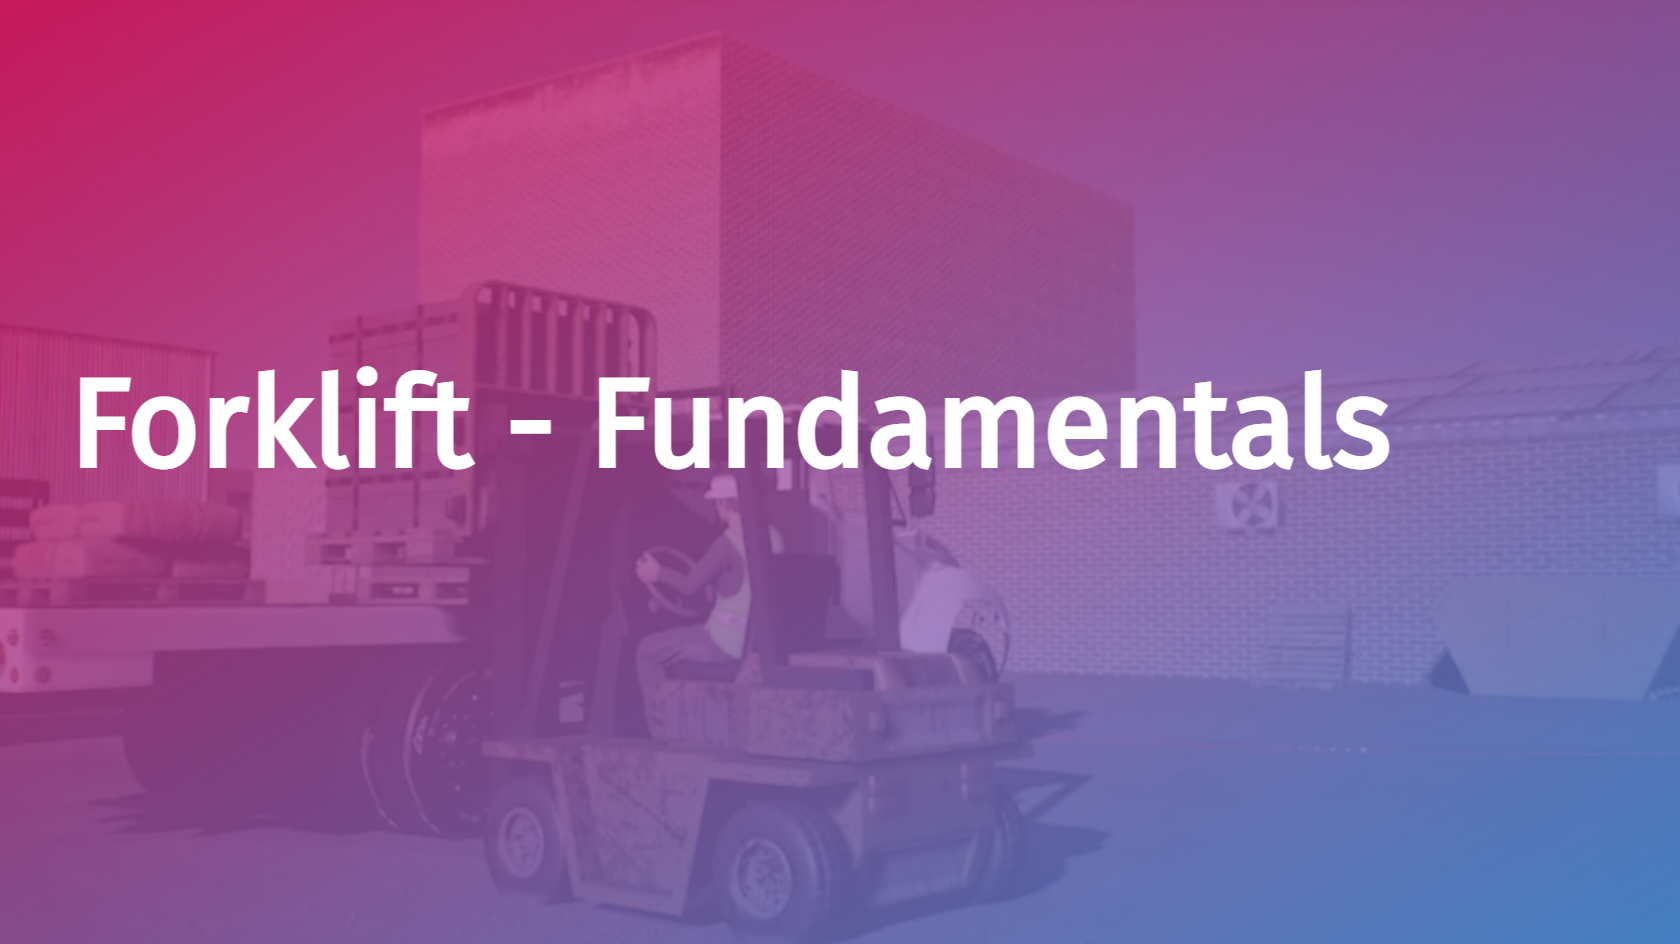 Forklift - Fundamentals